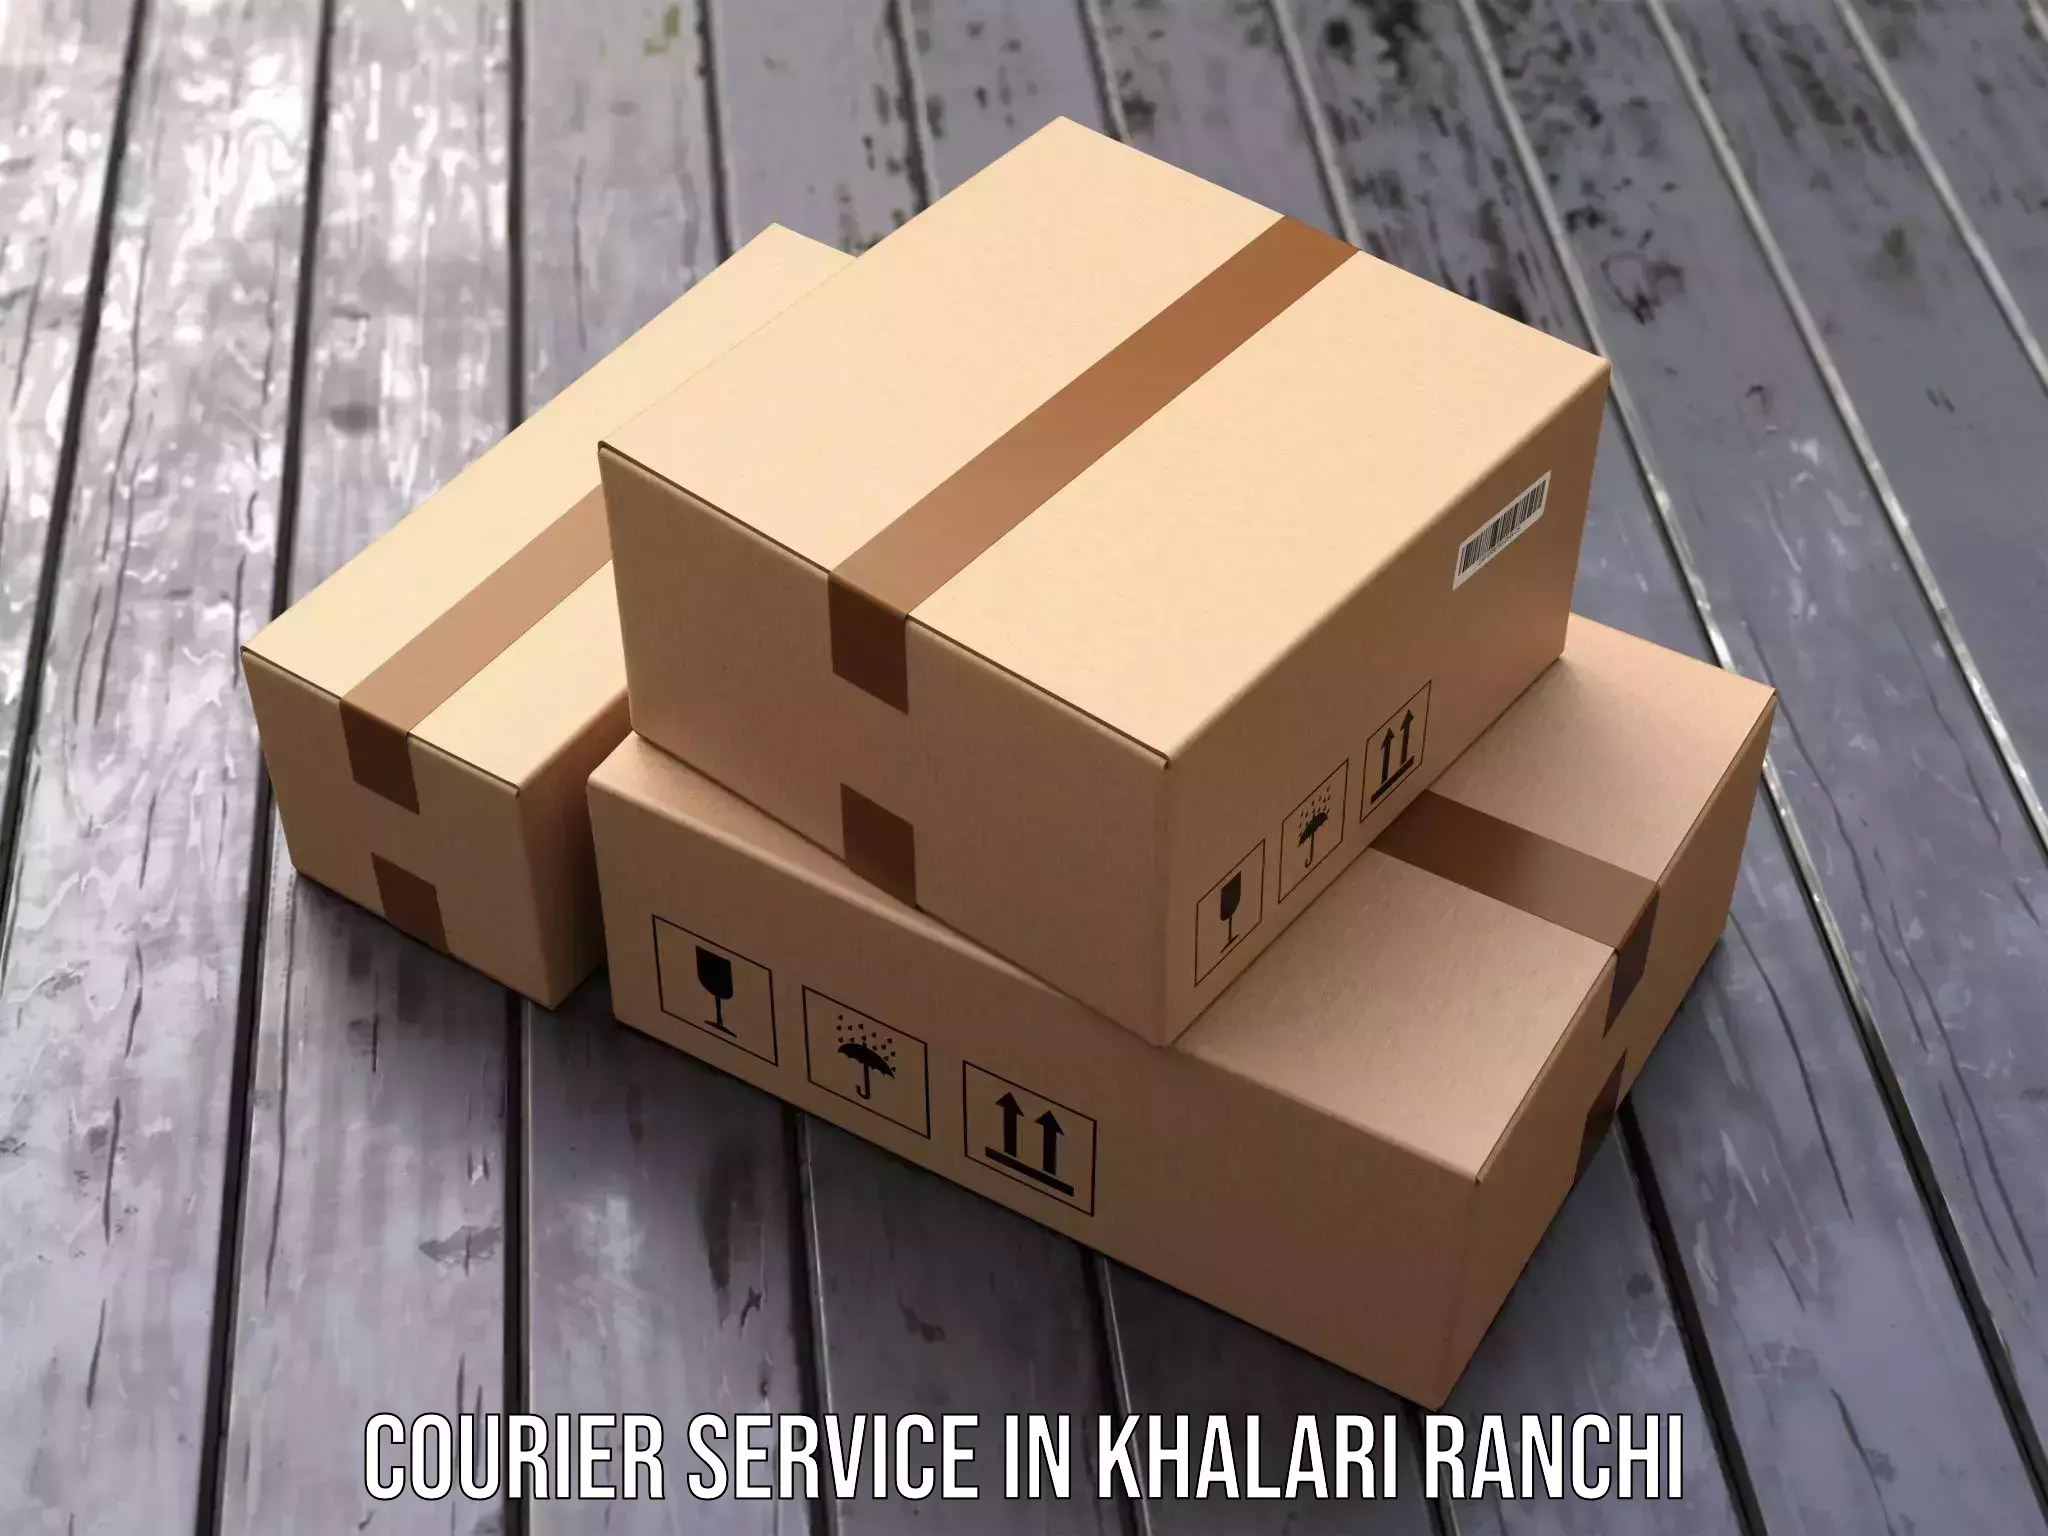 Overnight delivery in Khalari Ranchi